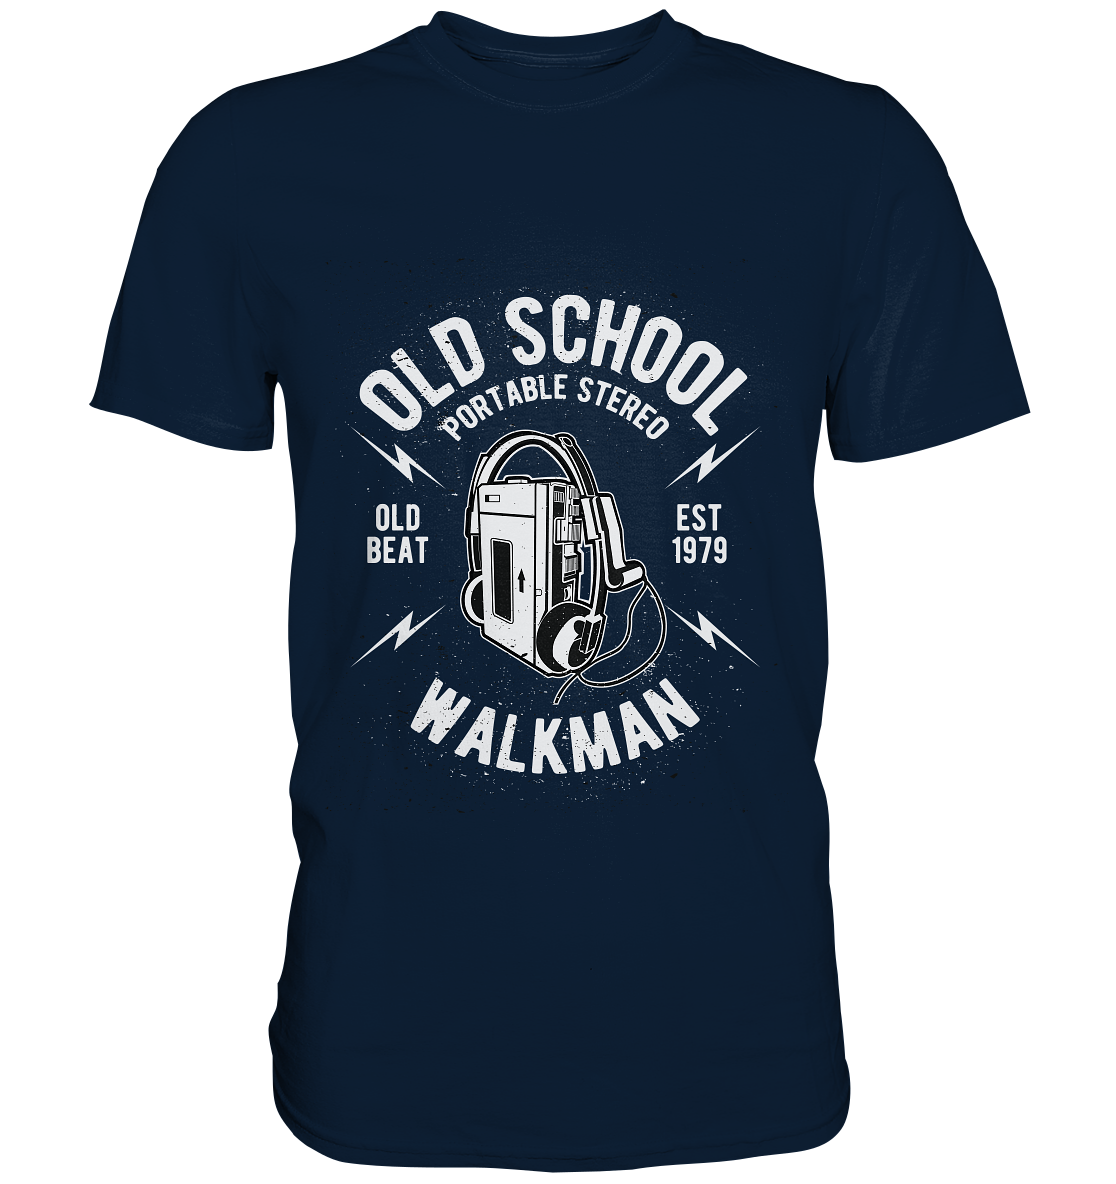 Old School. Vintage Walkman - Unisex Premium Shirt